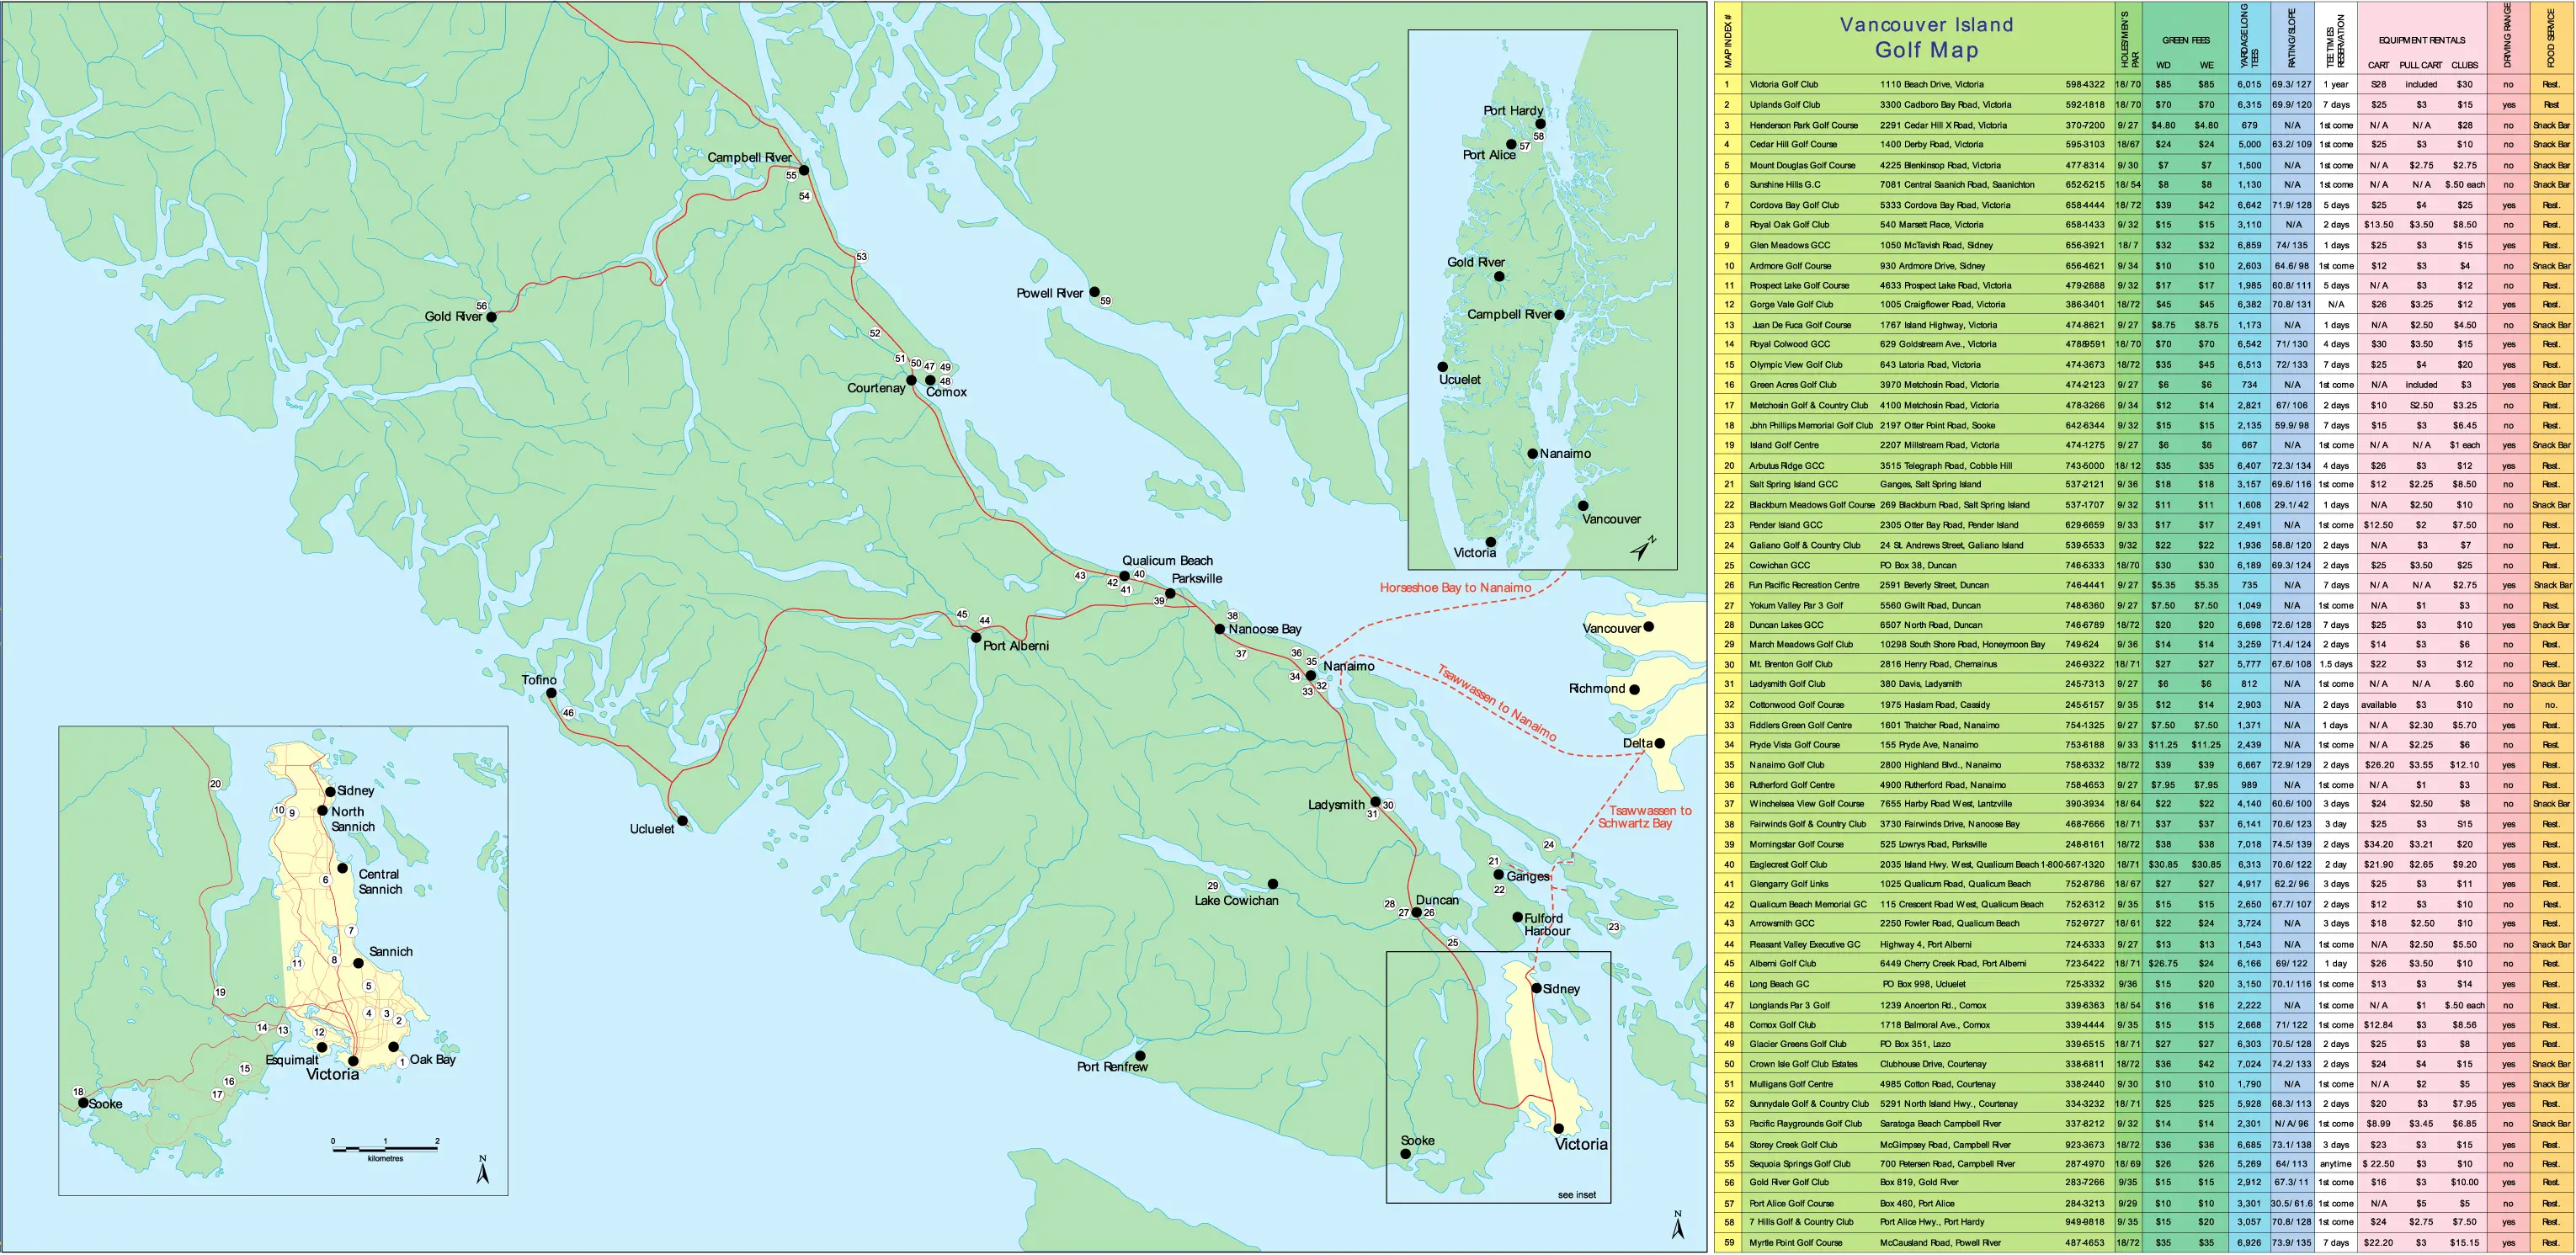 Vancouver Island Golf Map